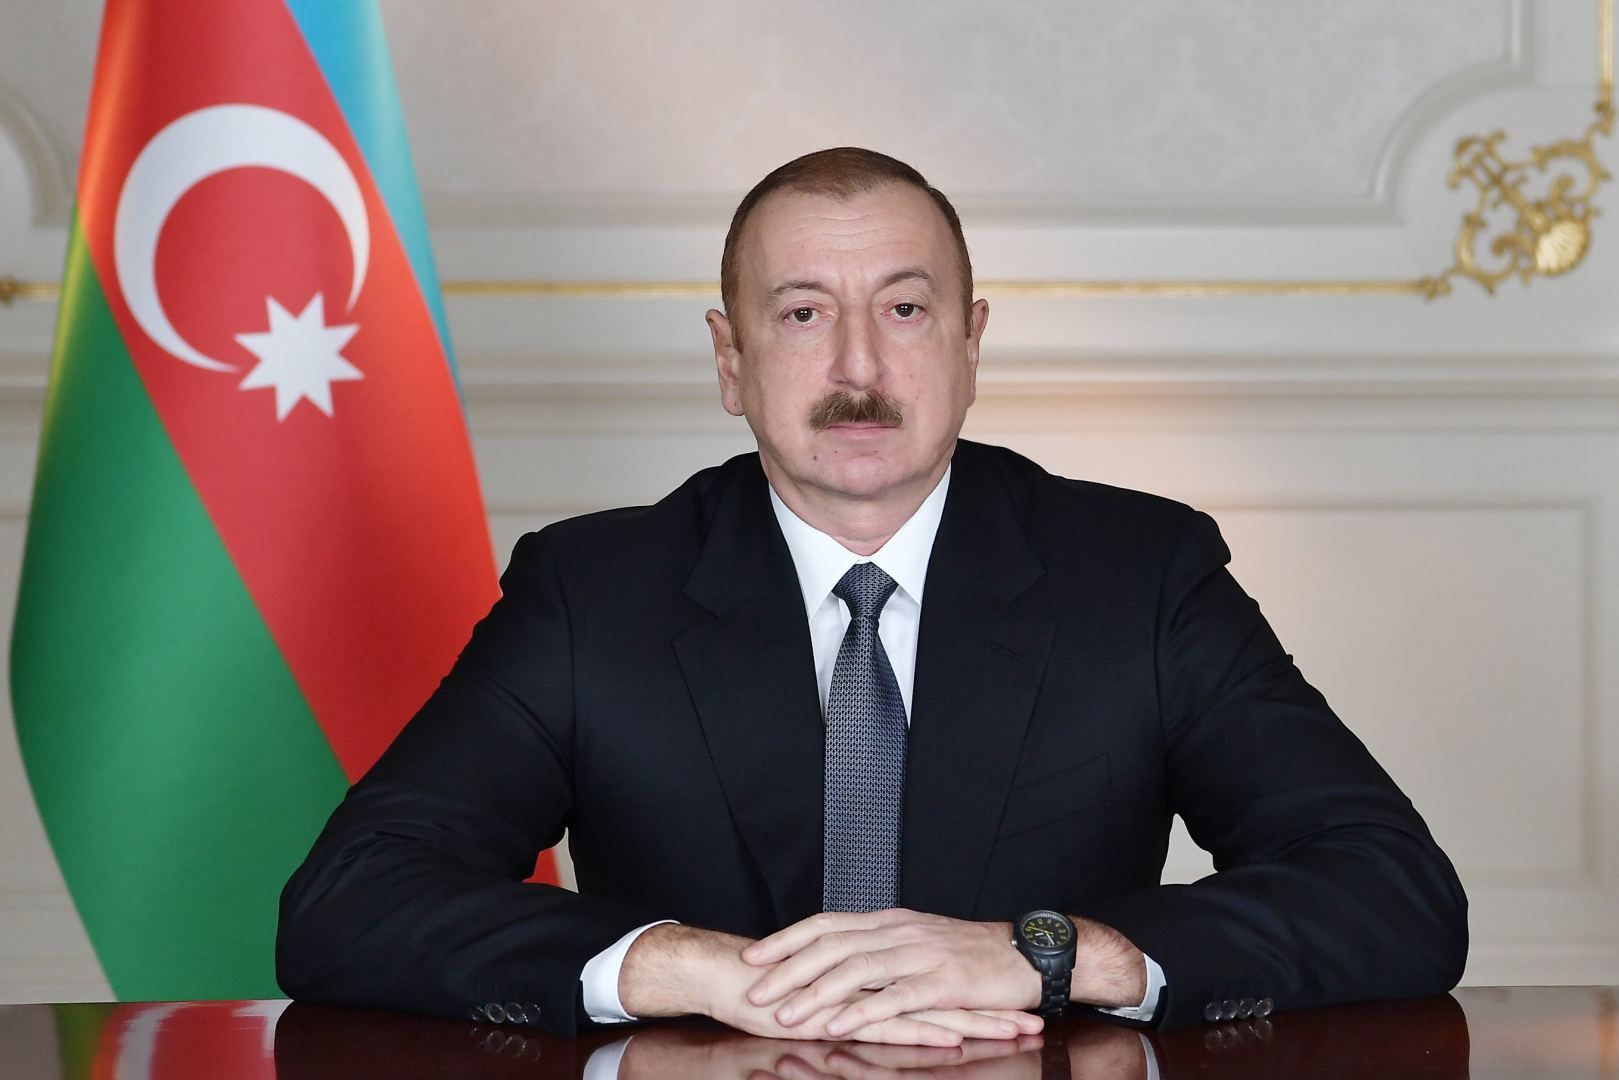 New Board of Trustees of Baku International Multiculturalism Center approved - order [UPDATE]